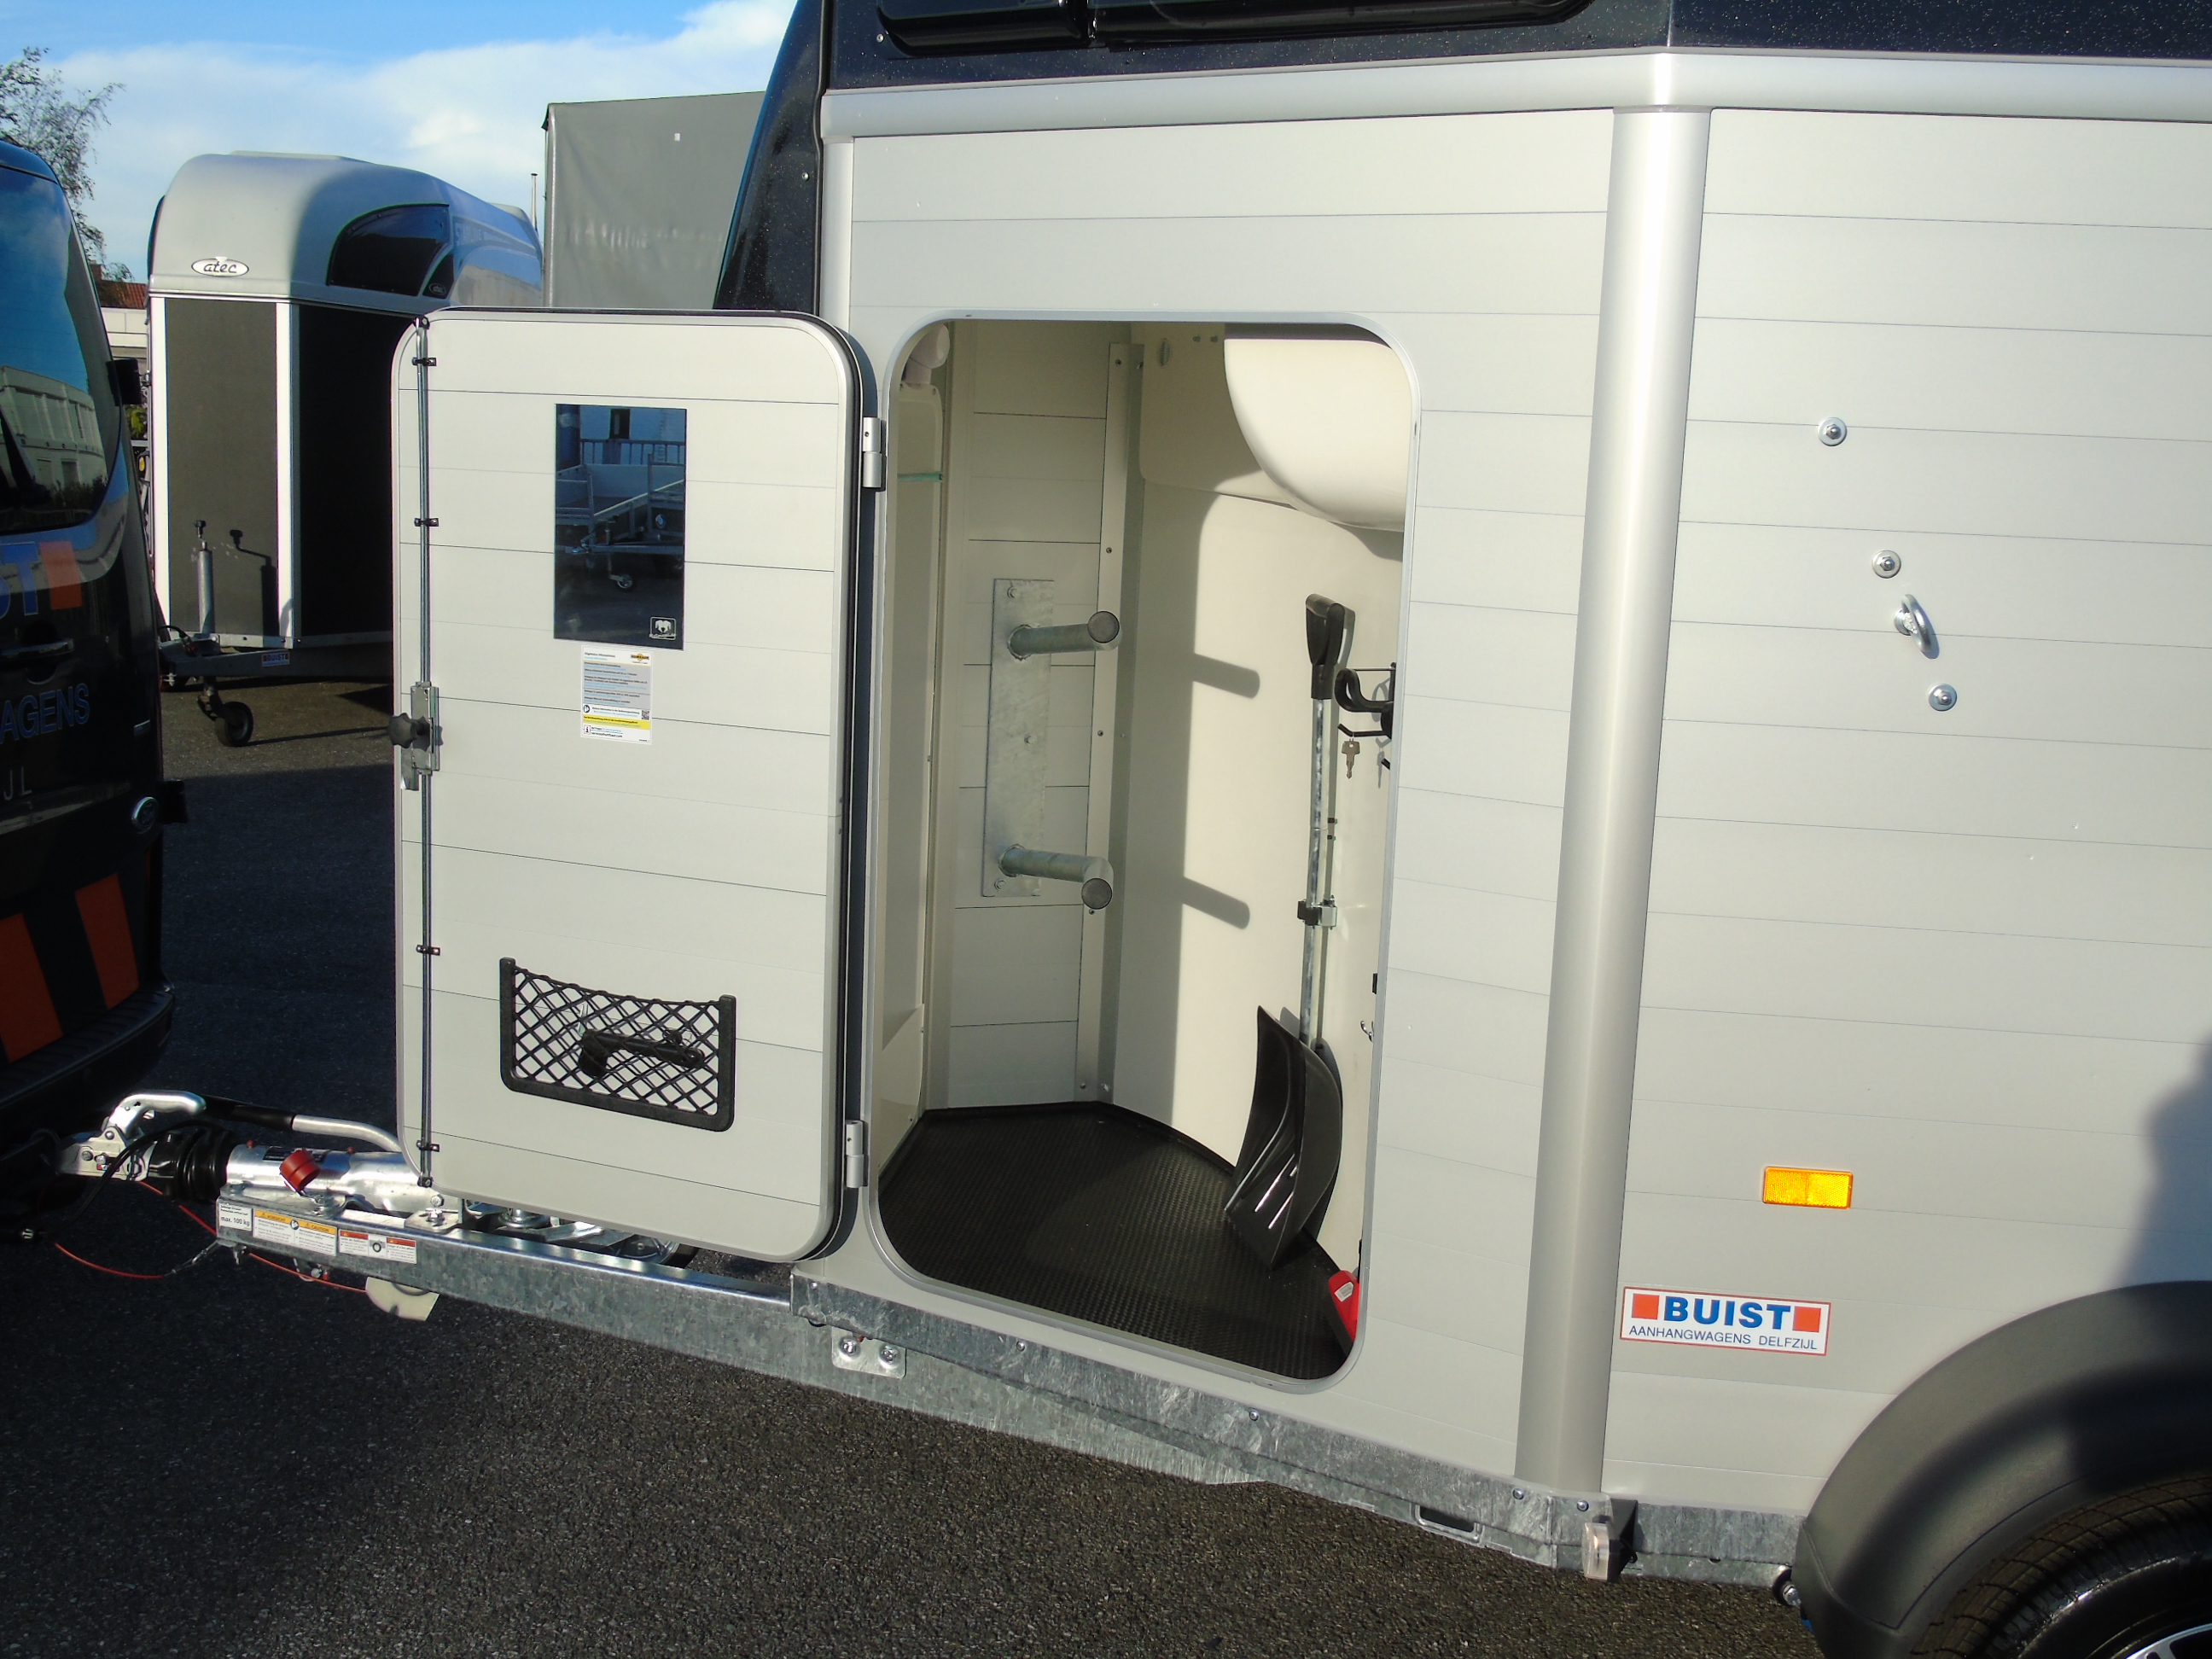 Voorraad Humbaur Xanthos AERO 2400 Black Metallic 2-paards trailer aluminium met zadelkamer